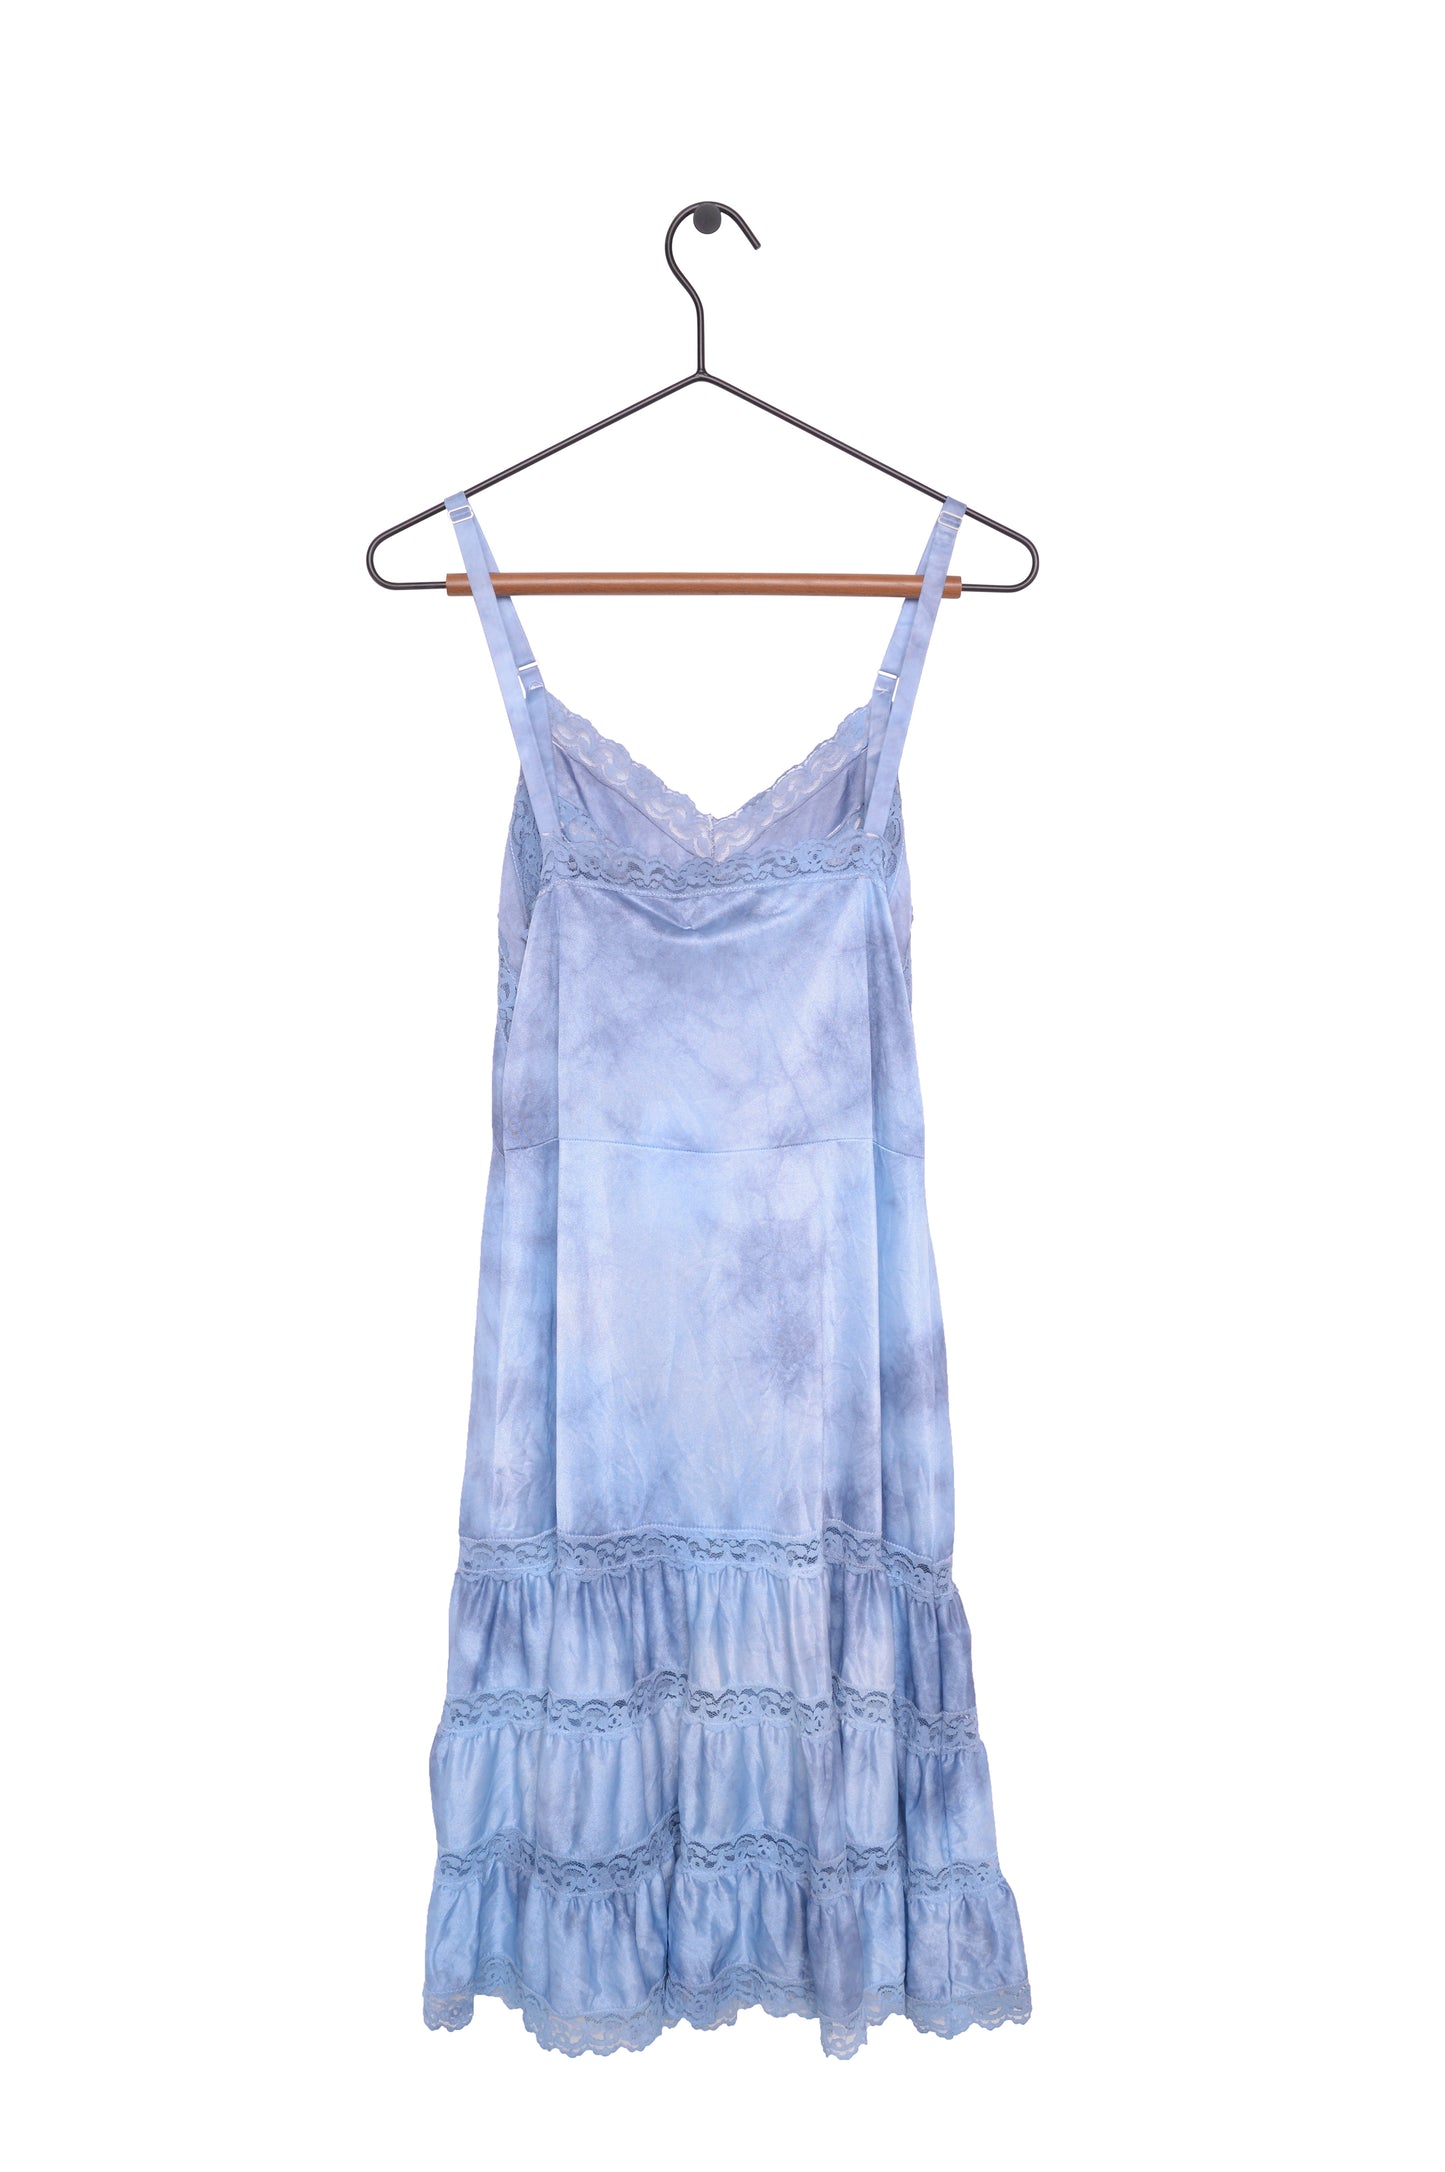 Hand-Dyed Lace Trim Slip Dress